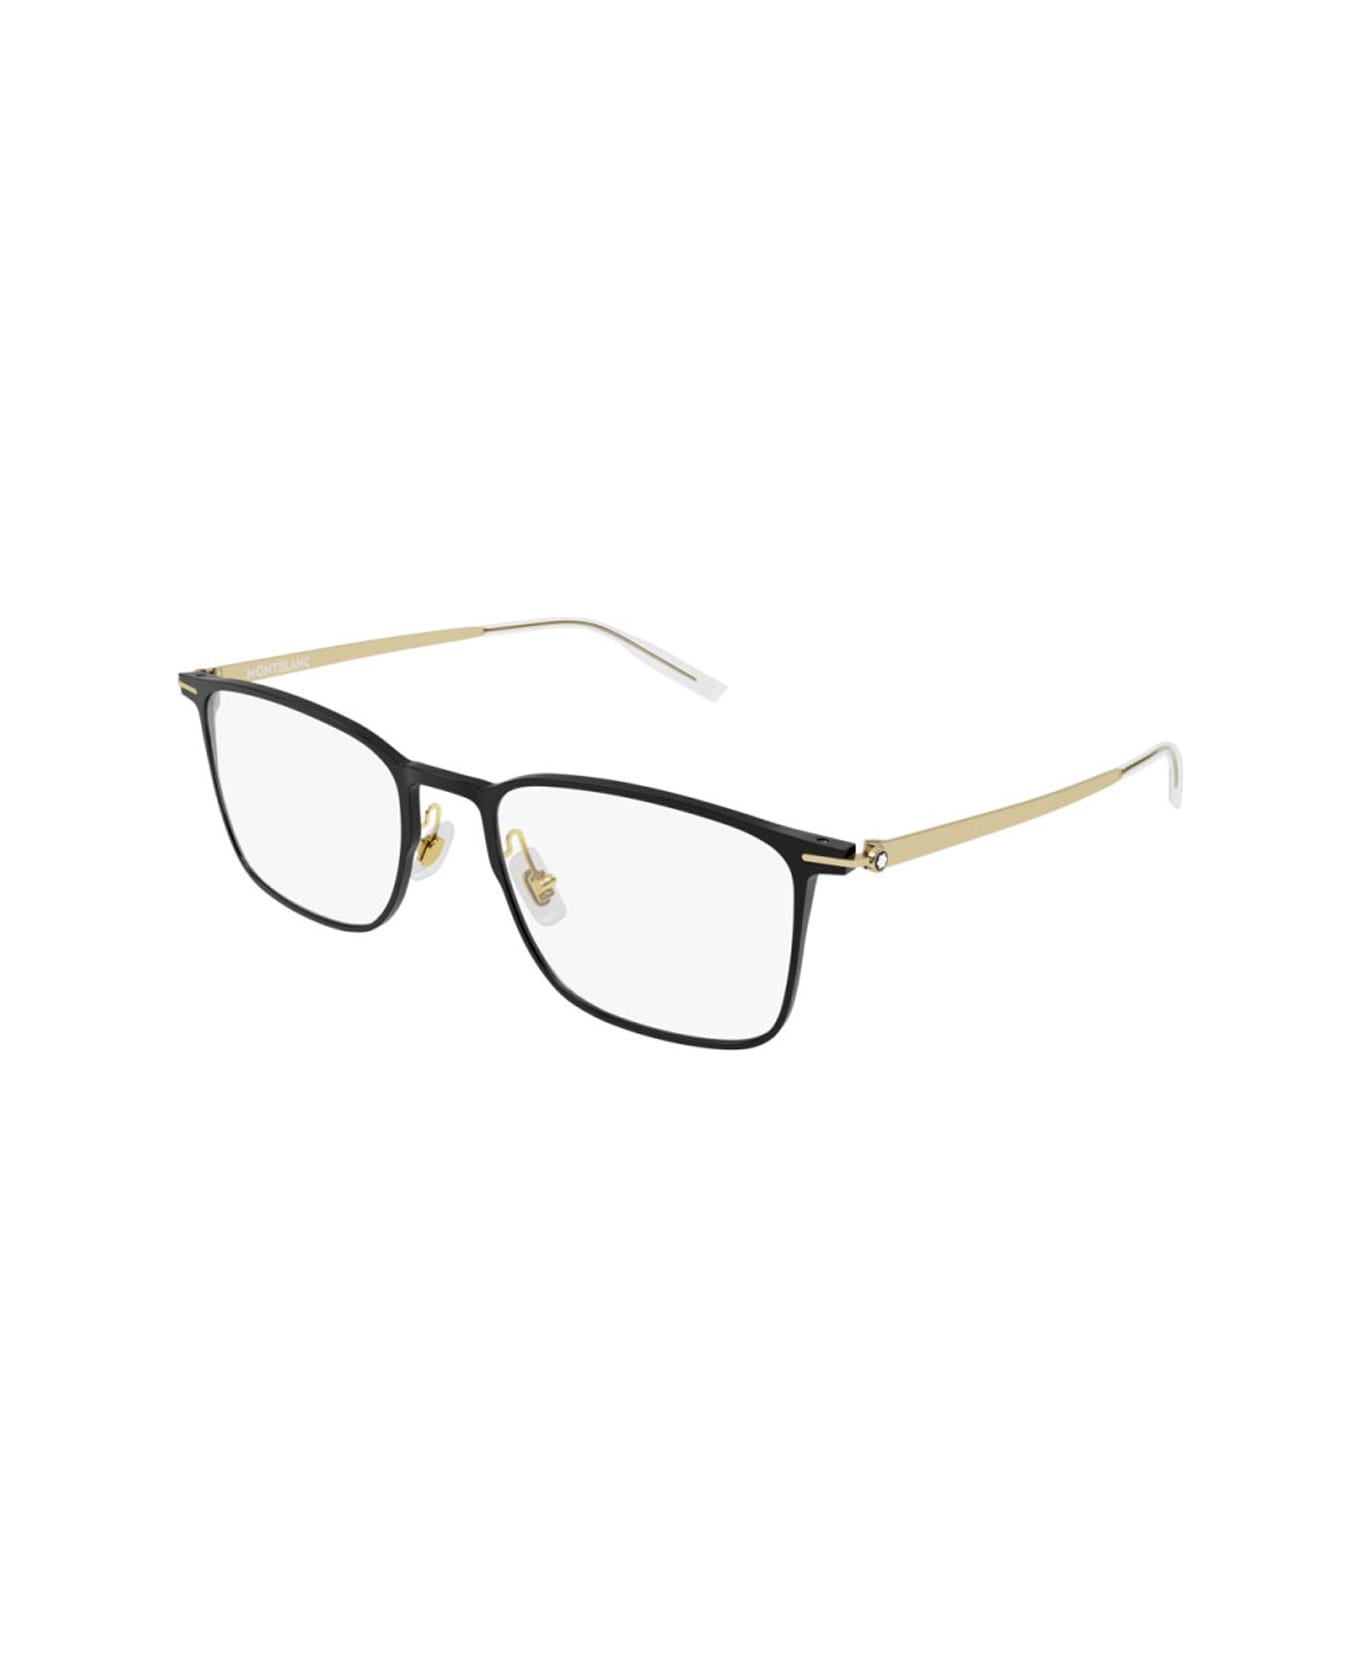 Montblanc Mb0193o 002 Glasses - Nero